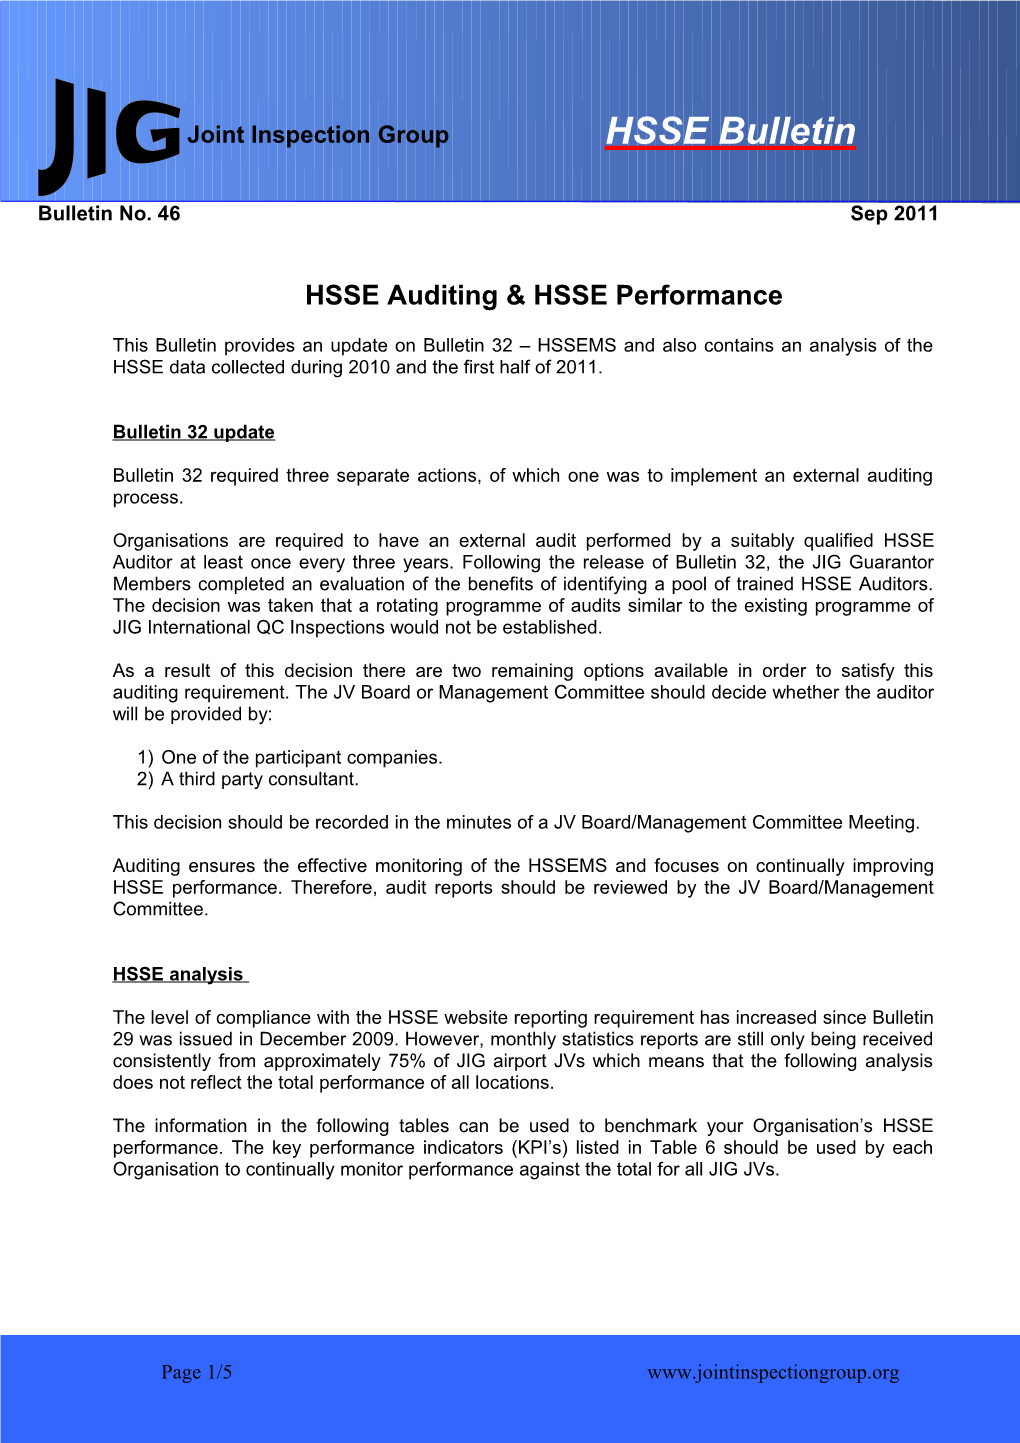 HSSE Auditing & HSSE Performance